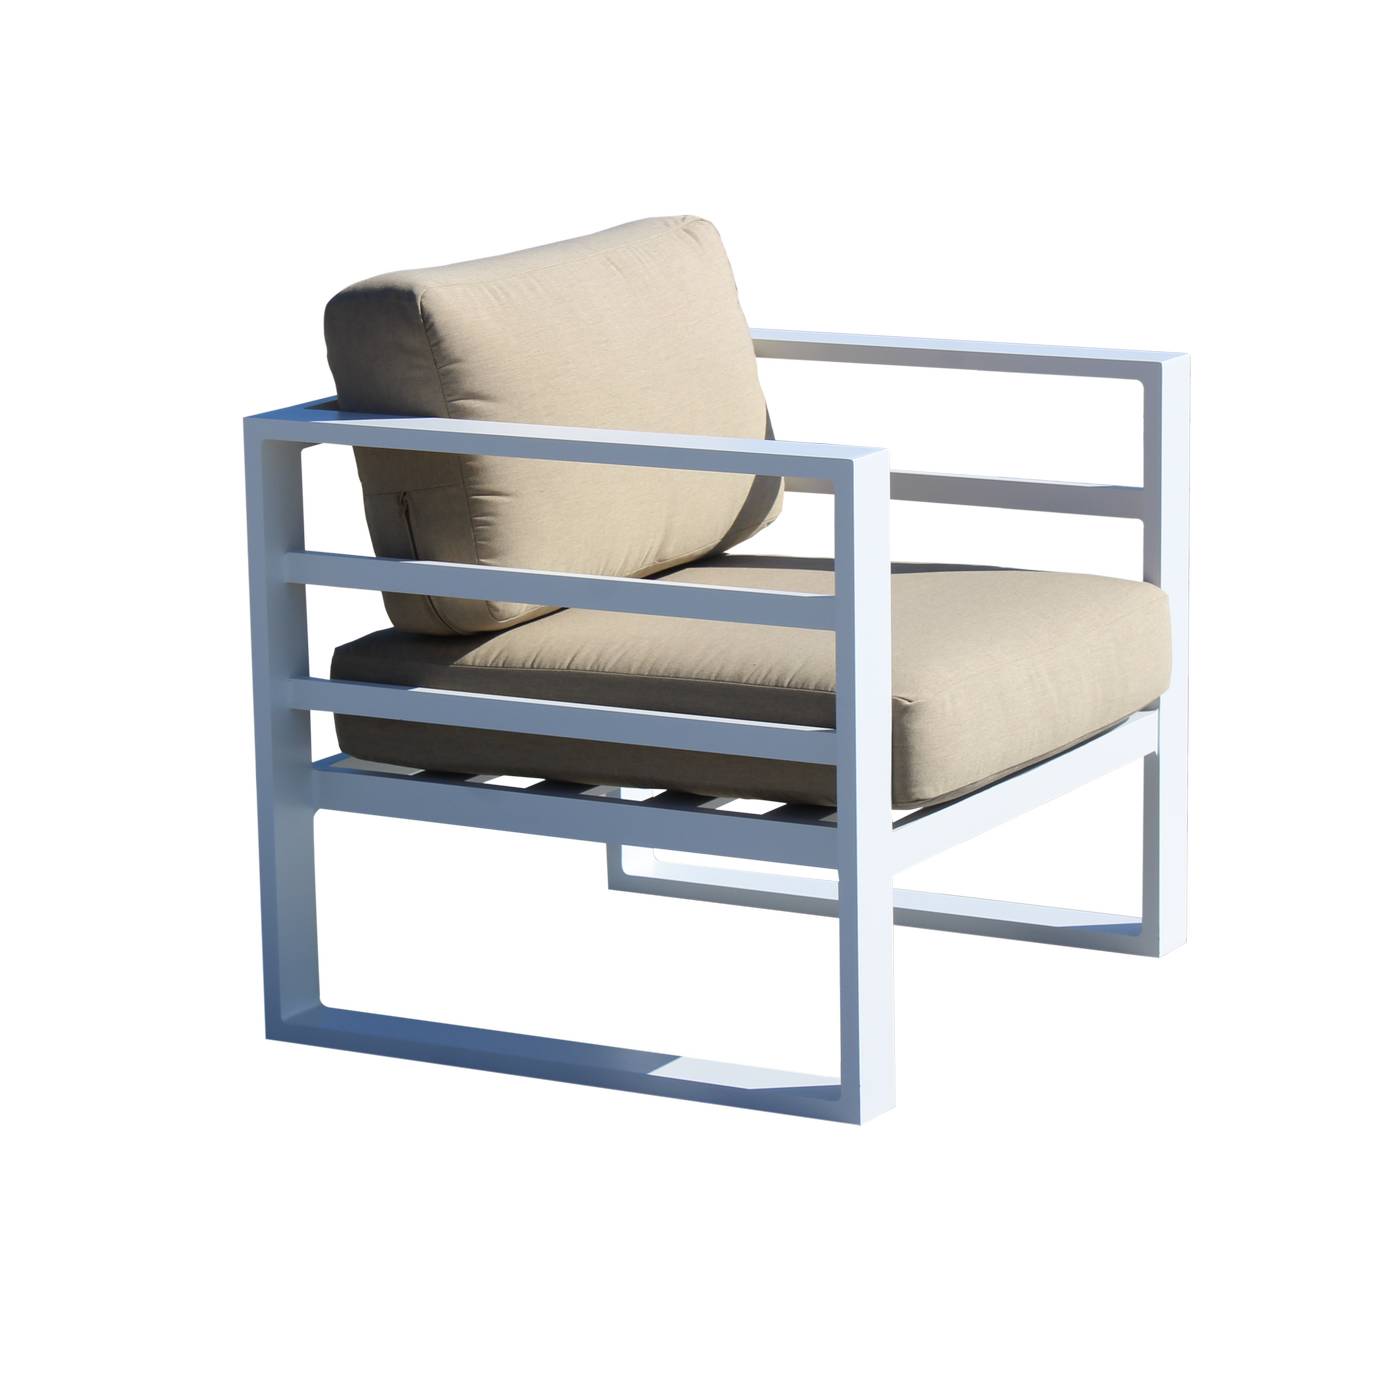 Set Aluminio Dalas-7 - Conjunto de aluminio para jardín o terraza: sofá 2 plazas + 2 sillones + mesa de centro. Disponible en color blanco o antracita.